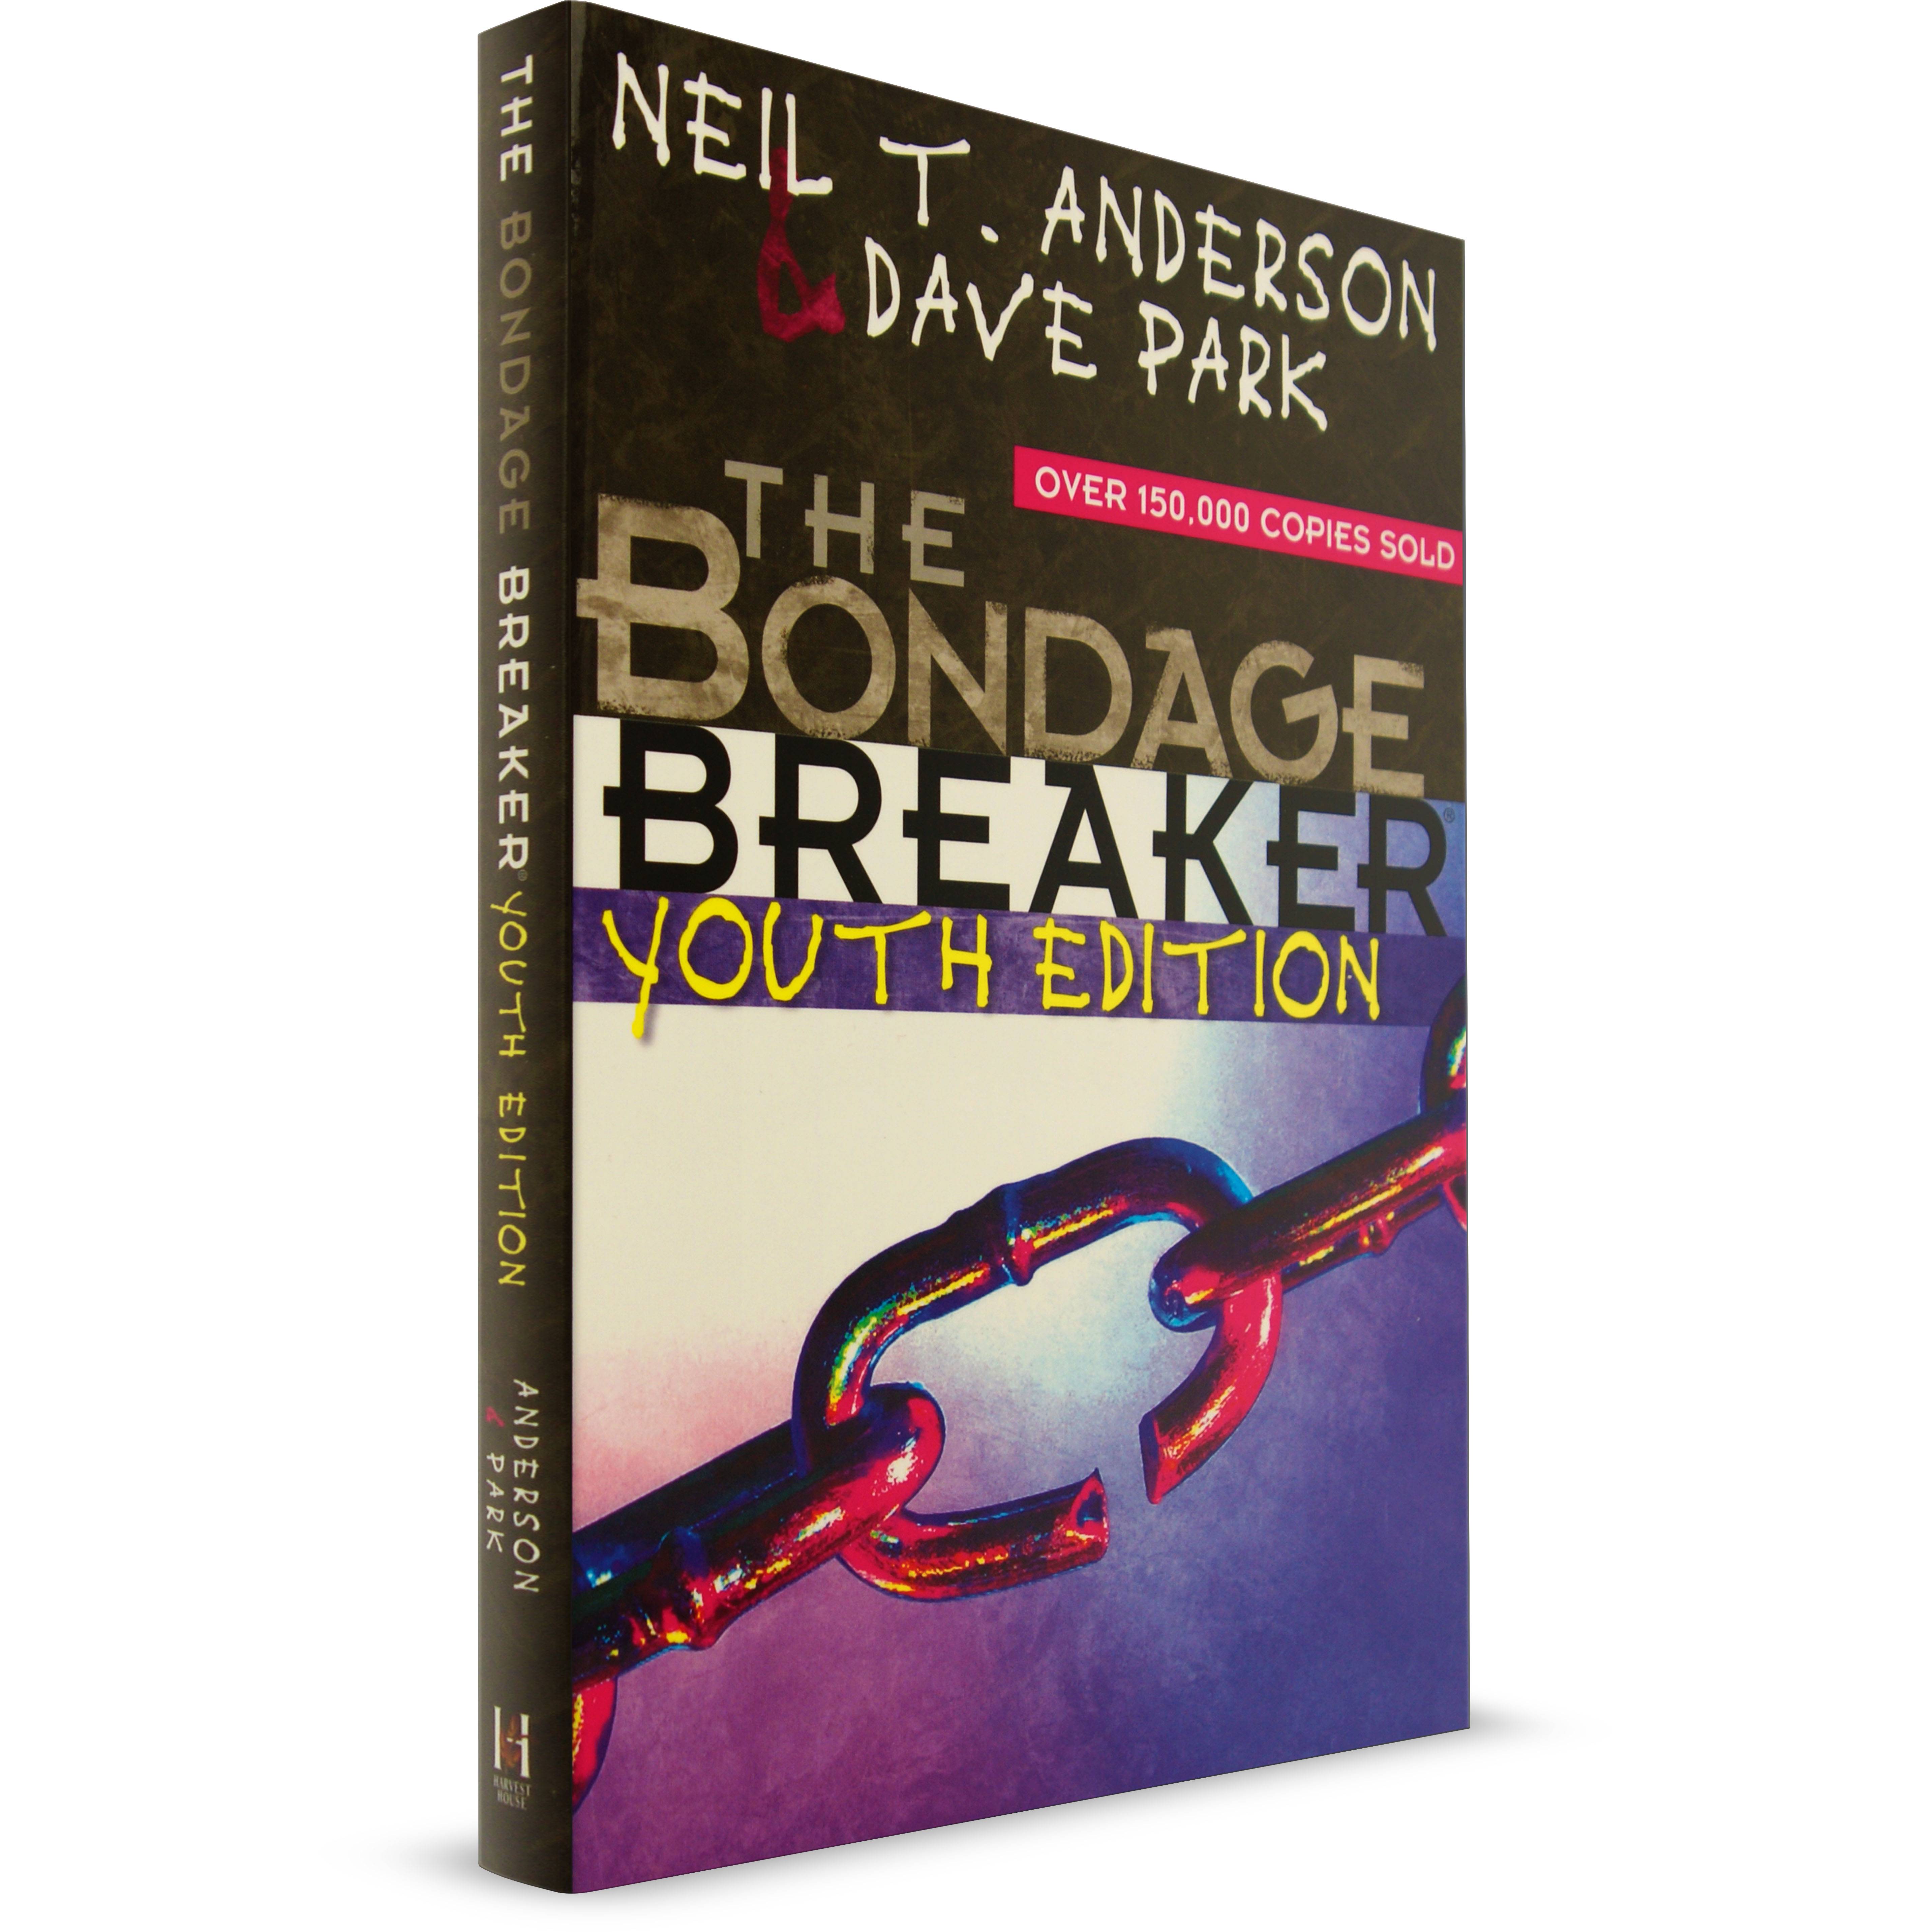 The bondage breaker dvd